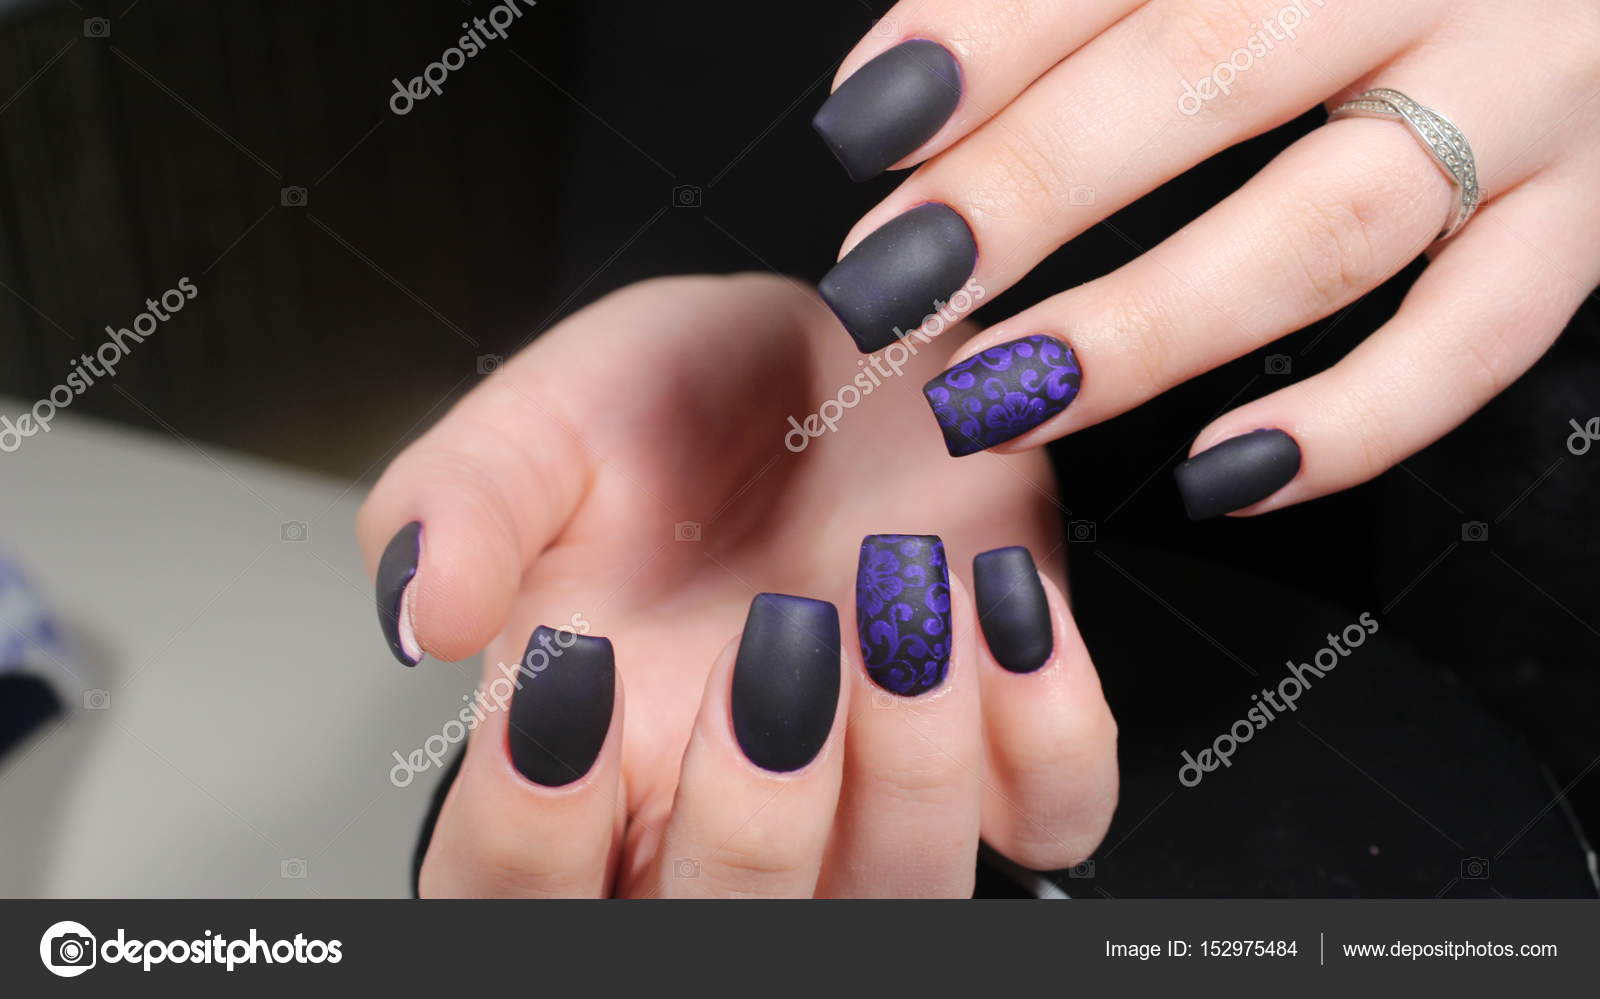 Black And Blue Nail Designs Design Of Manicure Matt Black And Blue Nails Stock Photo C Smirmaxstock 152975484